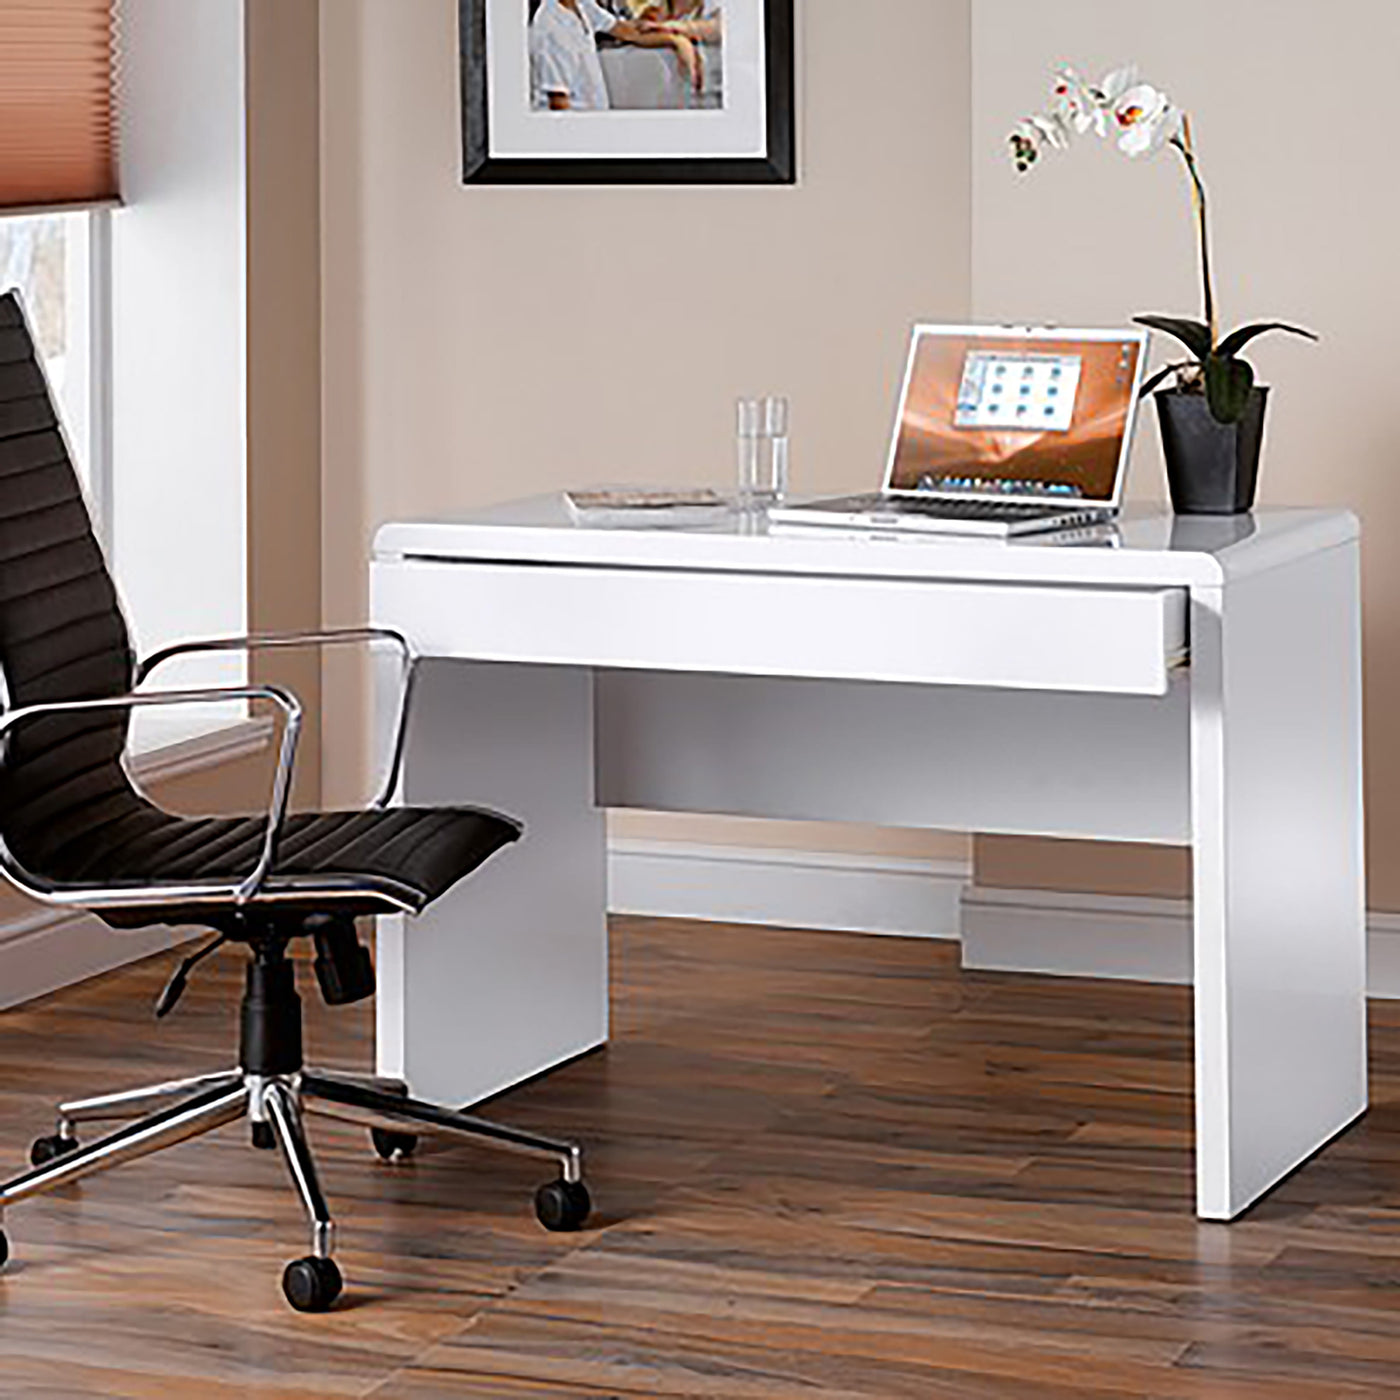 Luxor Home Office Workstation | Home Office Desk | Work From Home | Home Office Furniture | Sleek White Desk